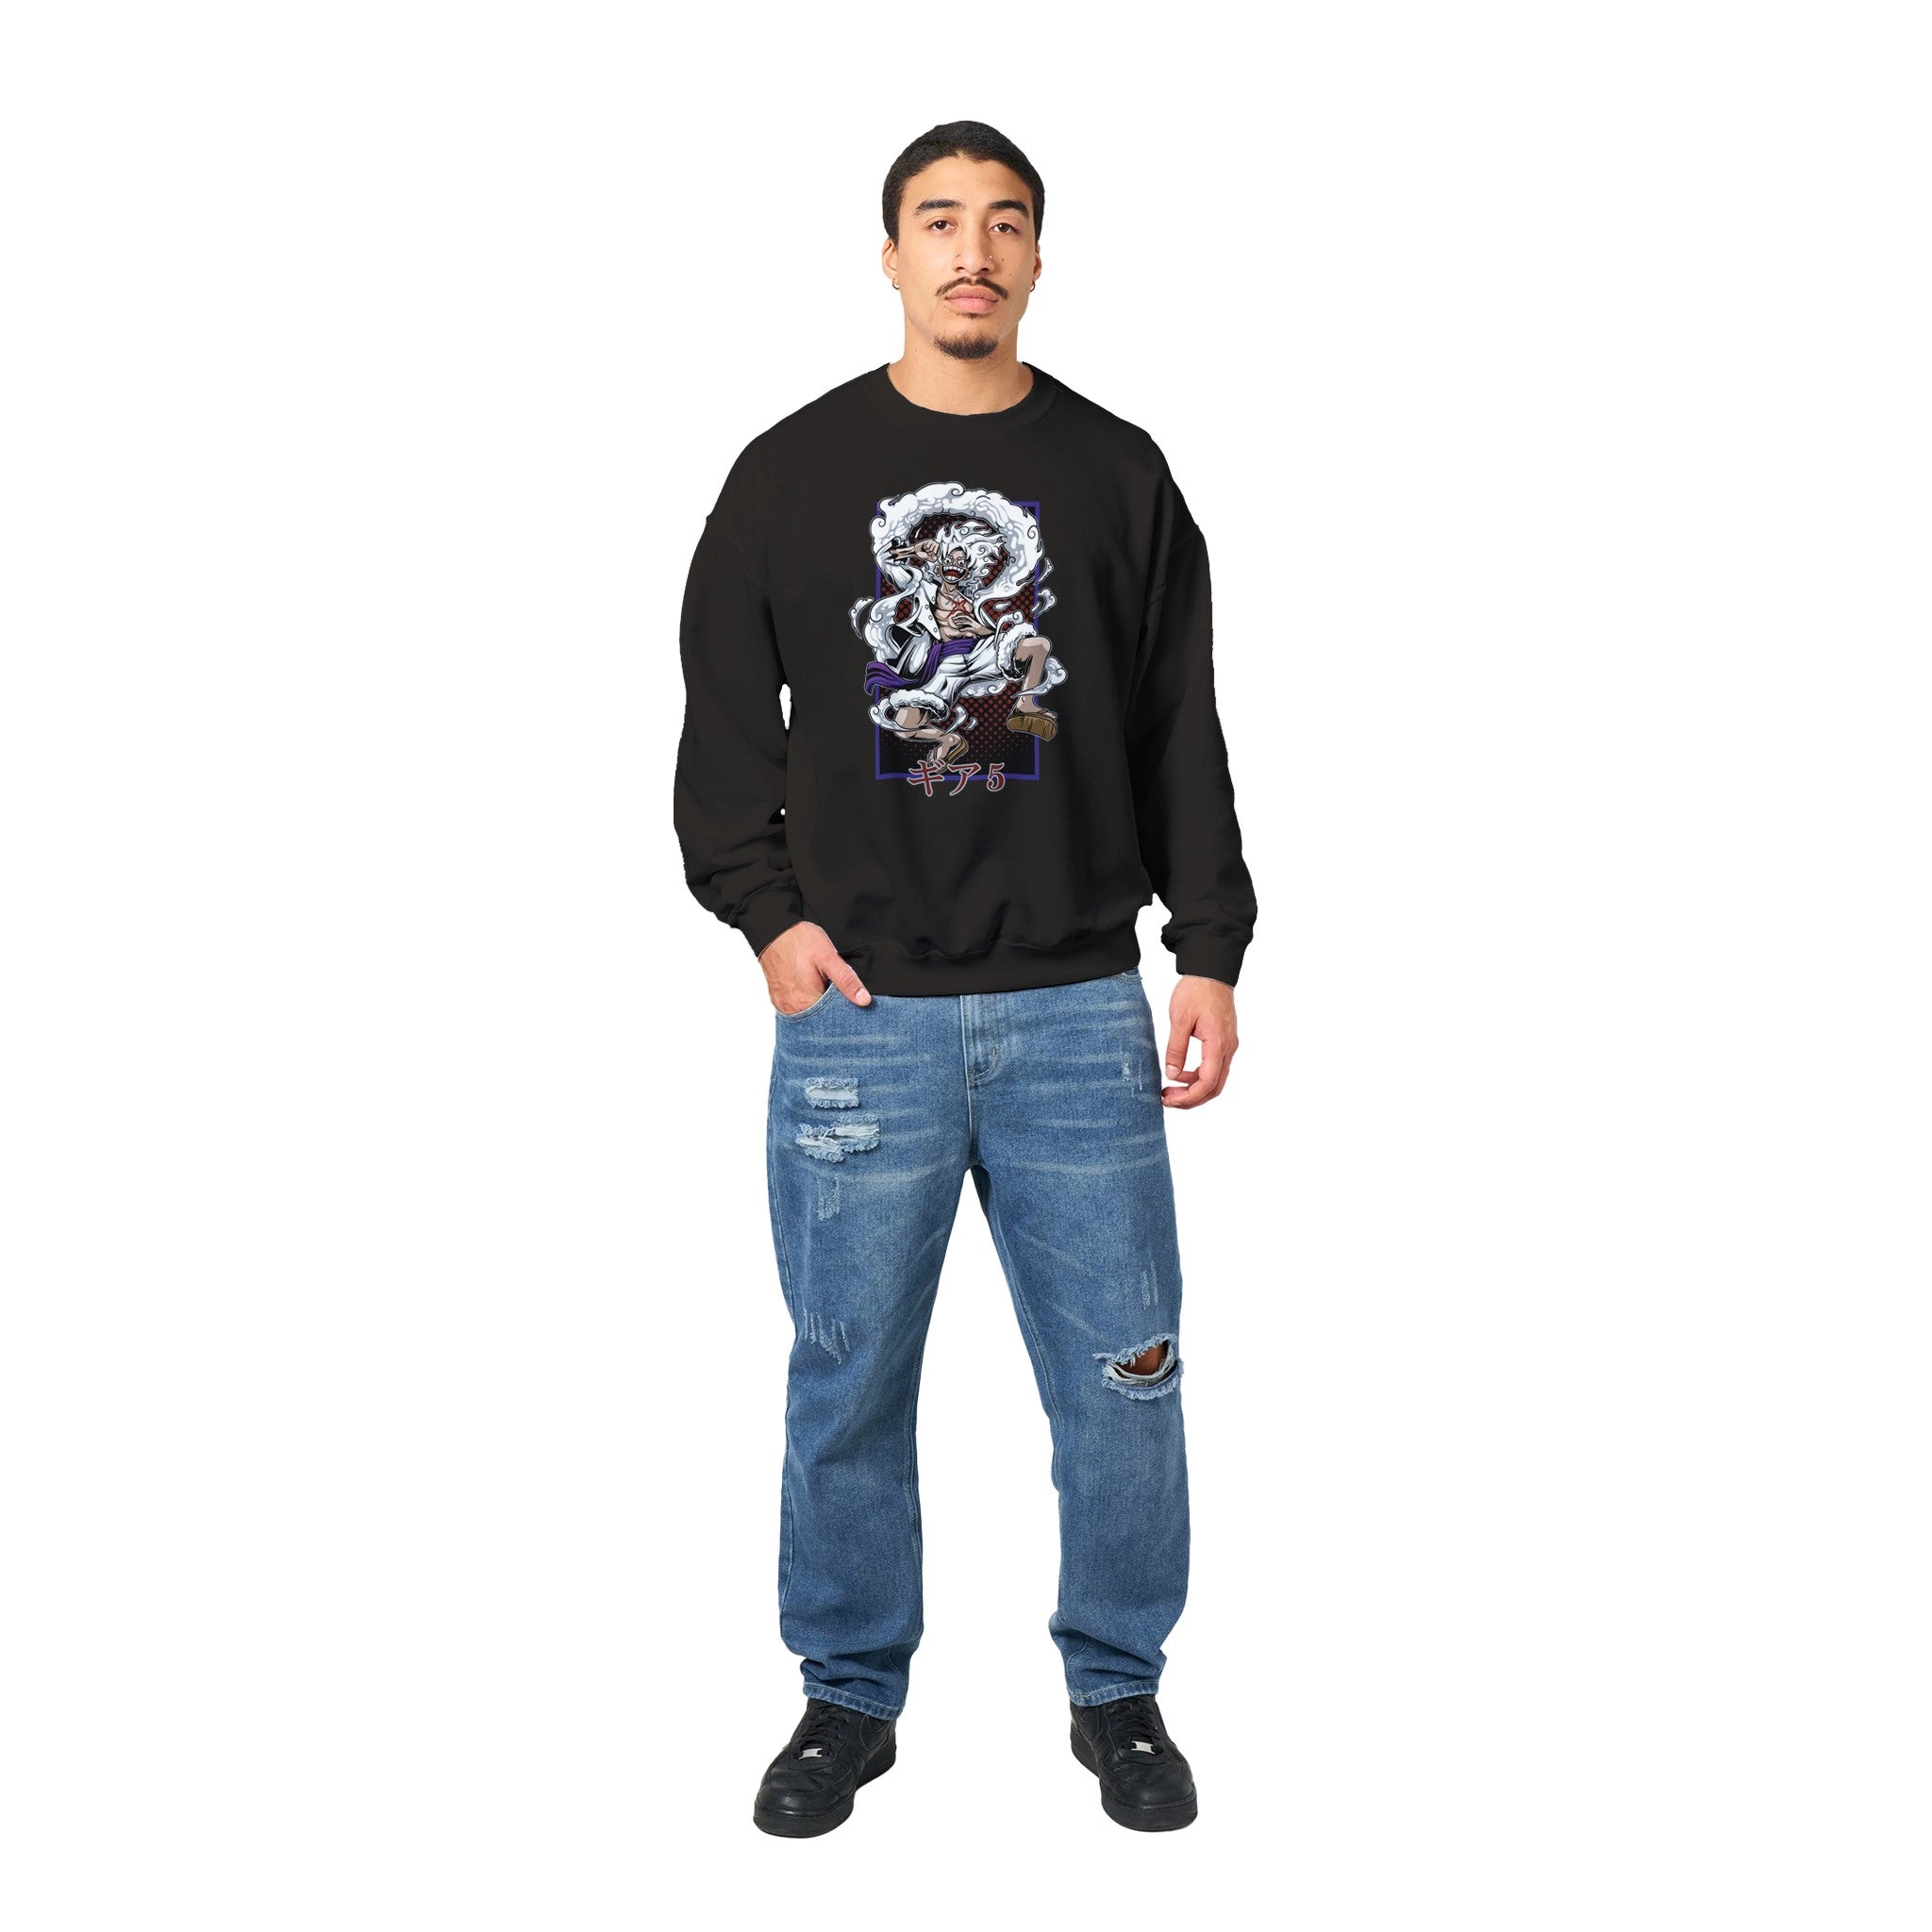 shop and buy one piece anime clothing luffy gear 5 sweatshirt/jumper/longsleeve